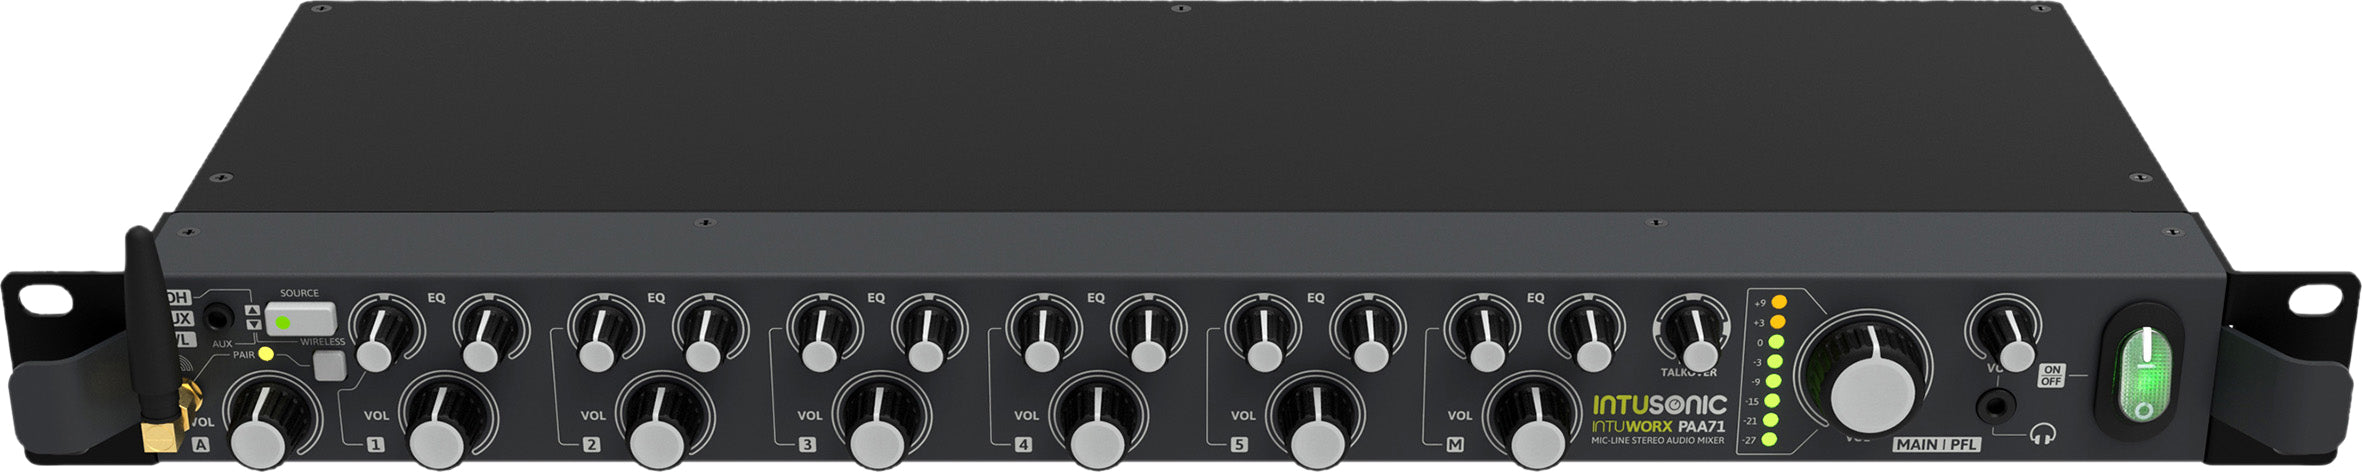 Intusonic IntuWorx PAA71 1U Mic/Line Audio Mixer